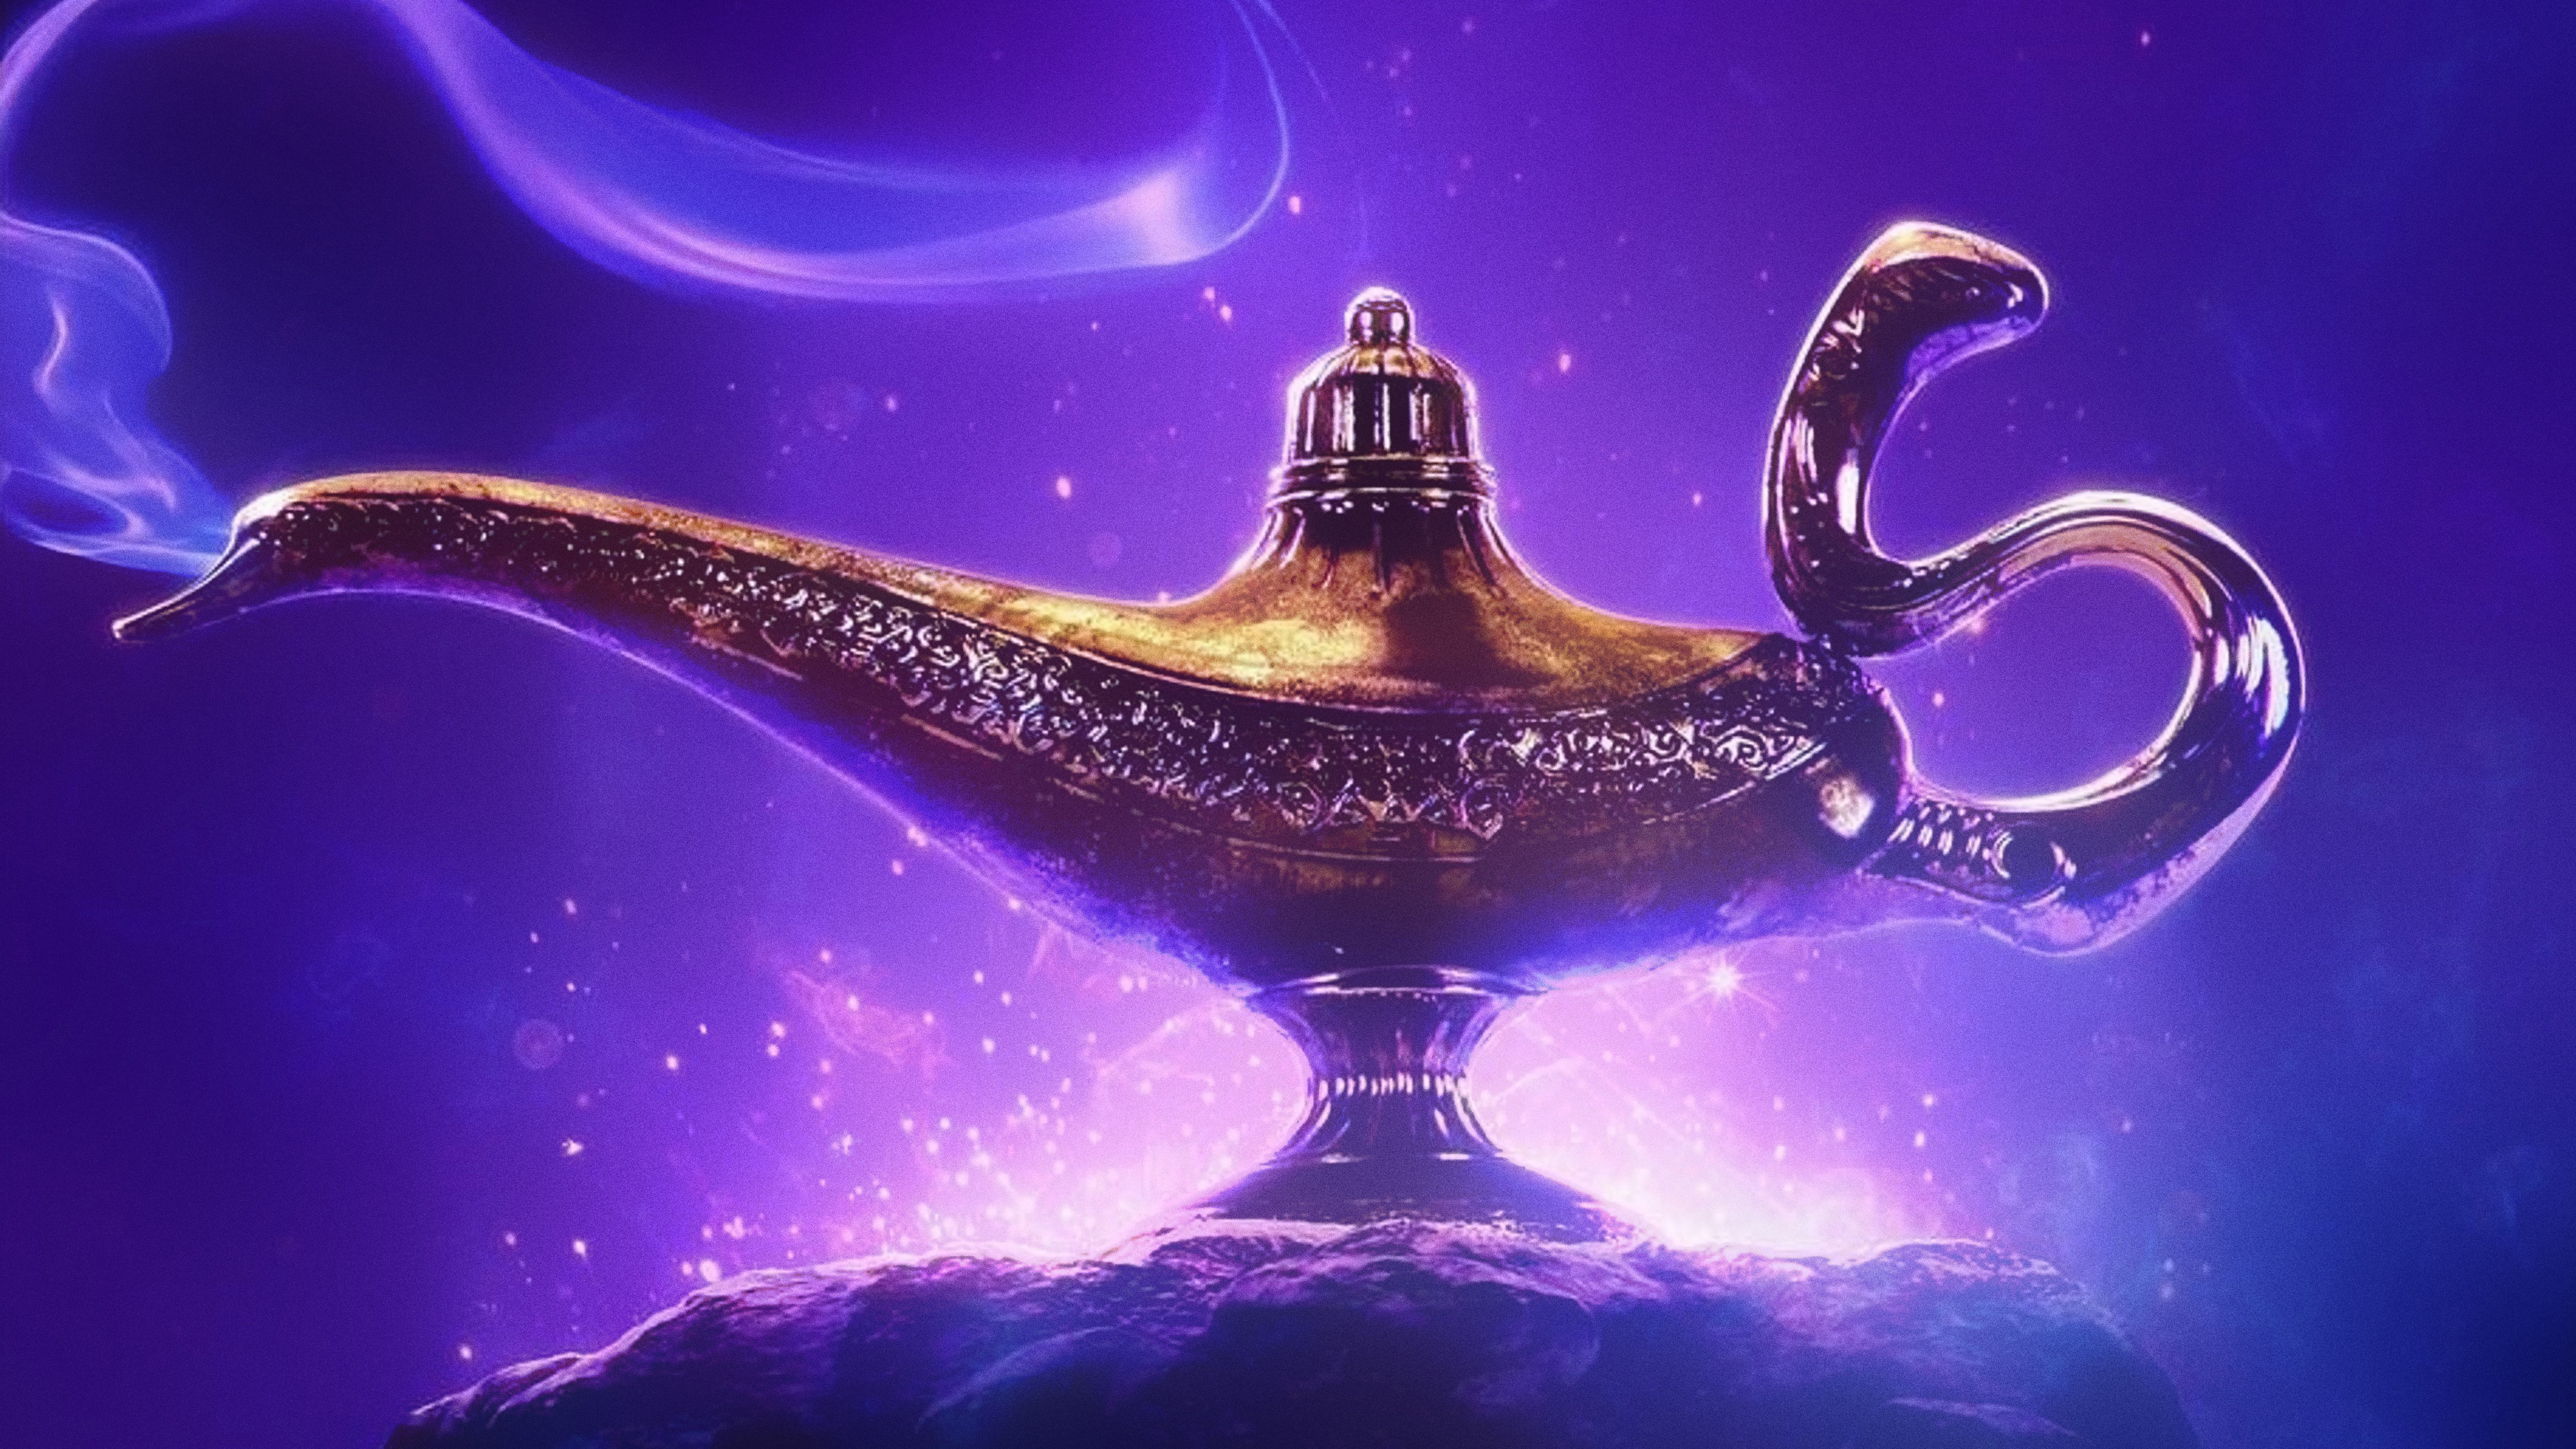 Disney Aladdin 2019 Wallpapers